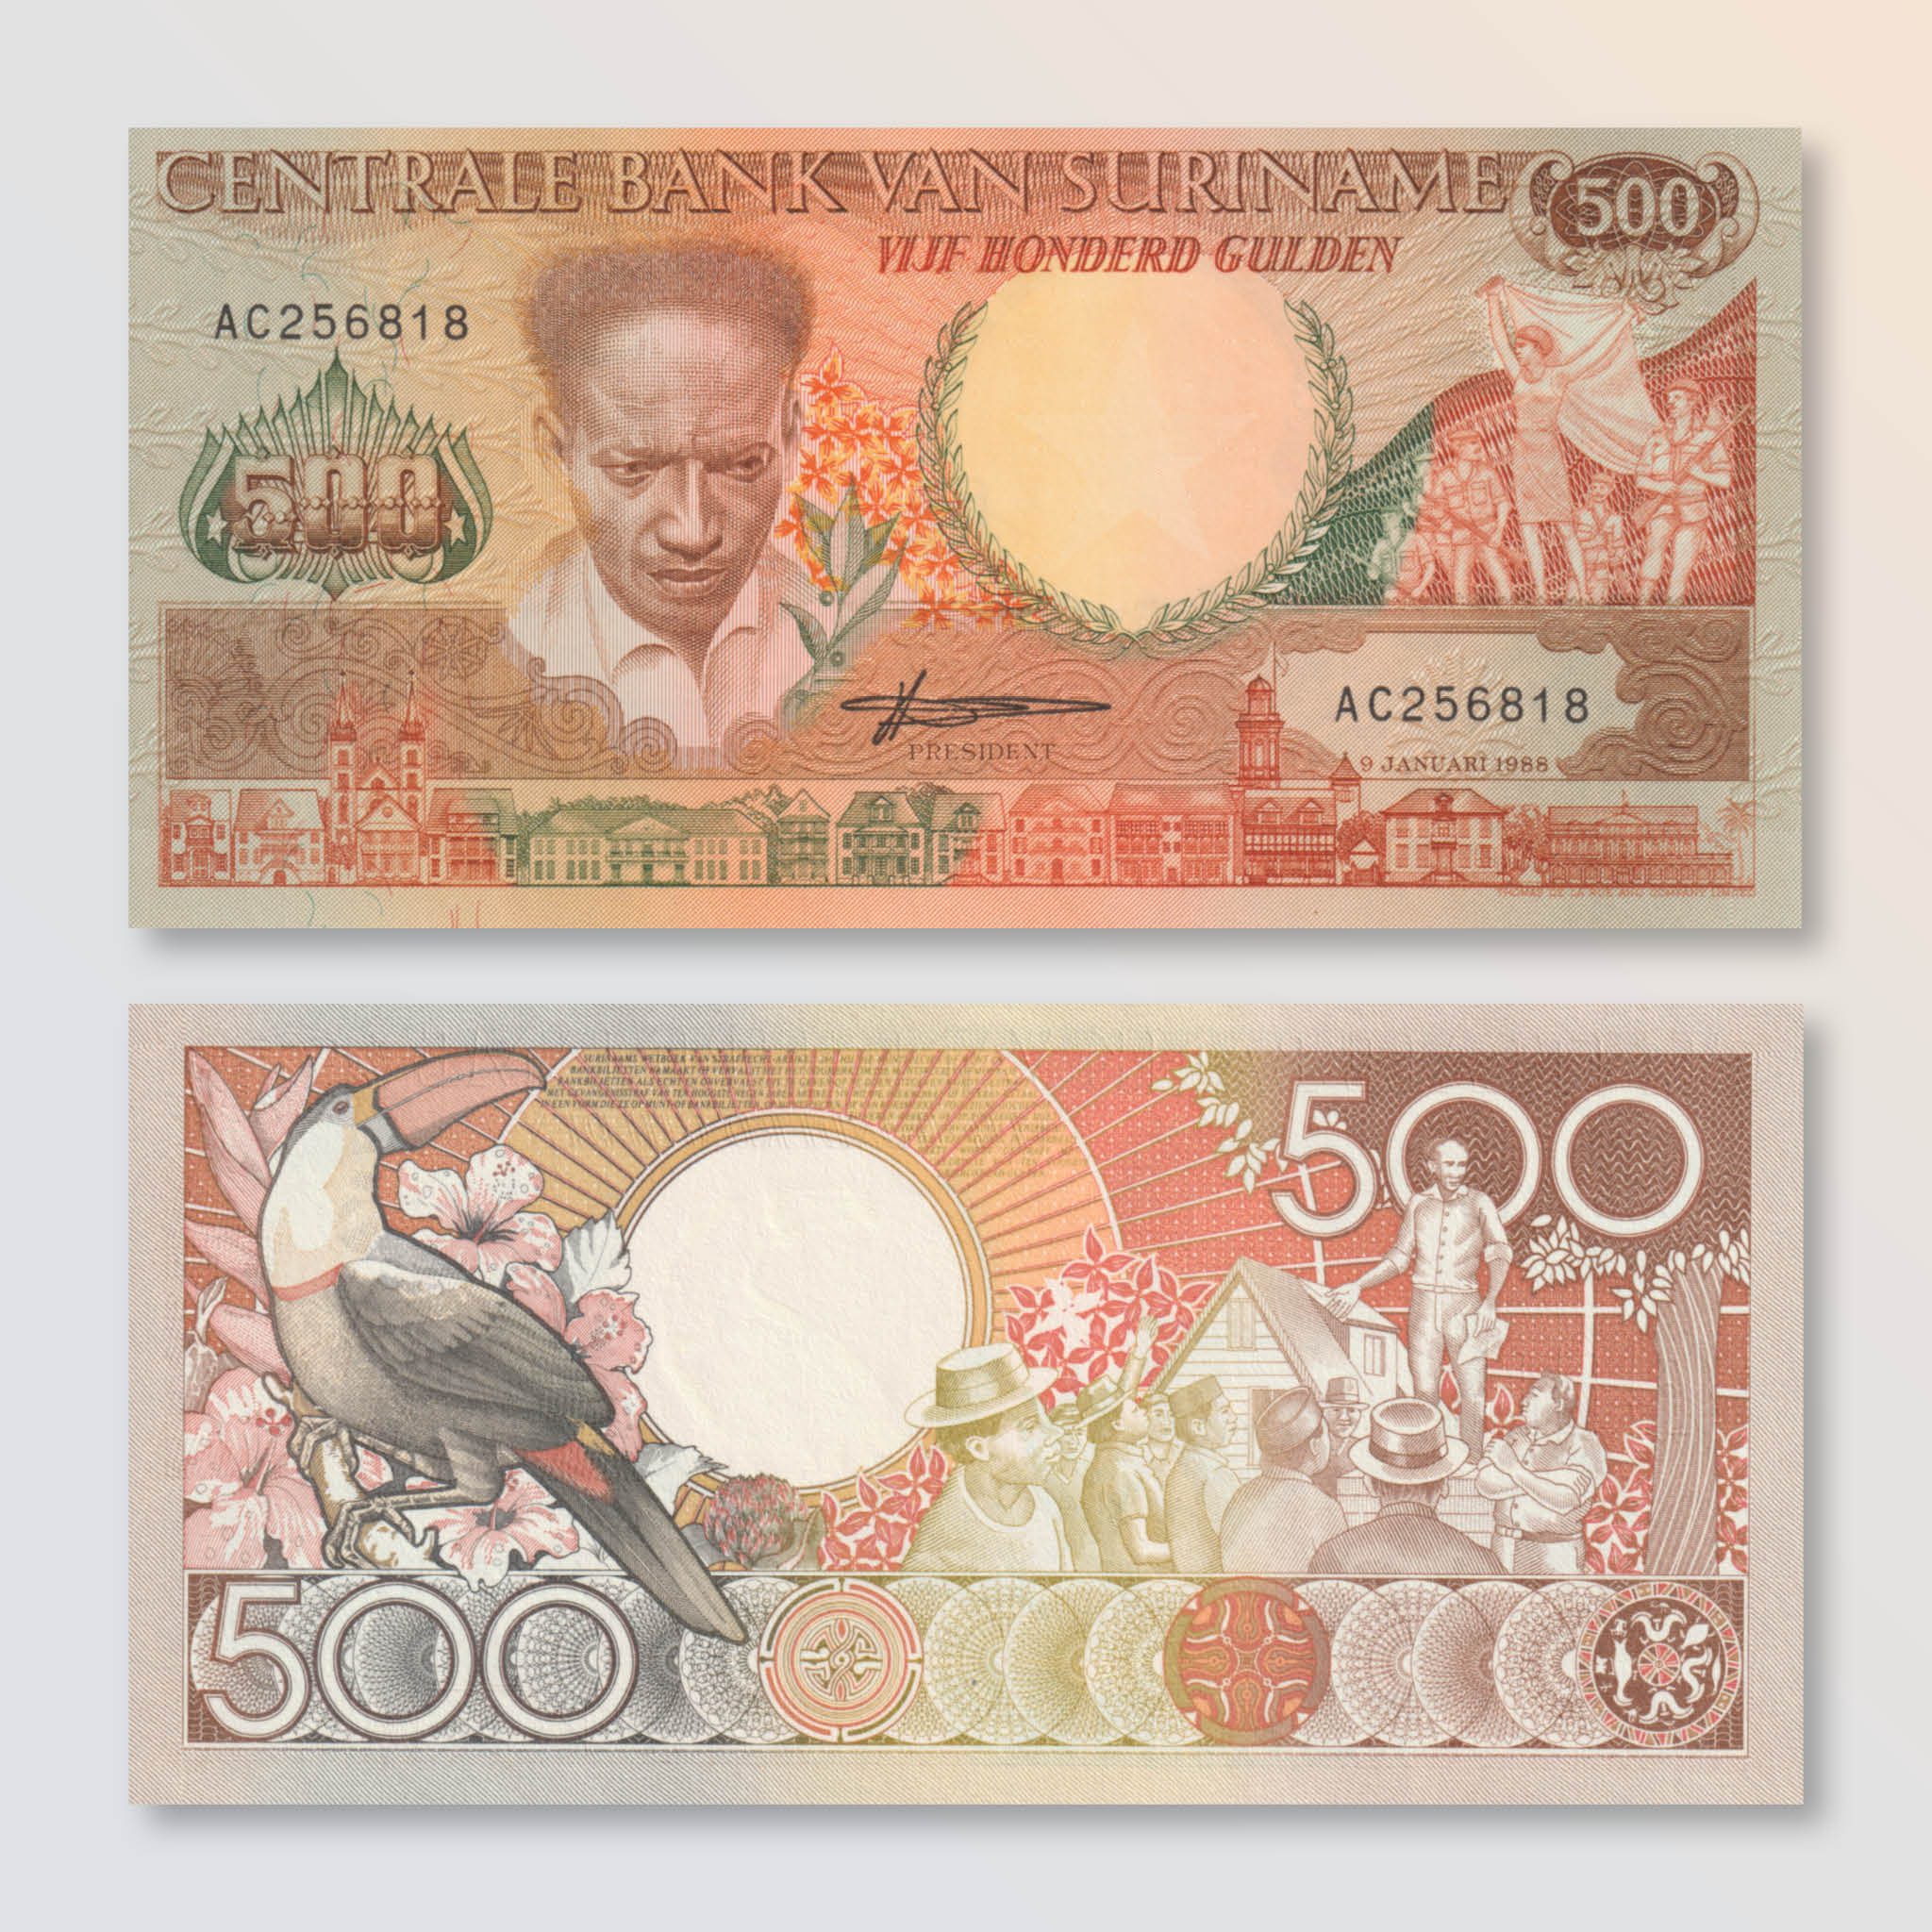 Suriname 500 Gulden, 1988, B521b, P135b, UNC - Robert's World Money - World Banknotes